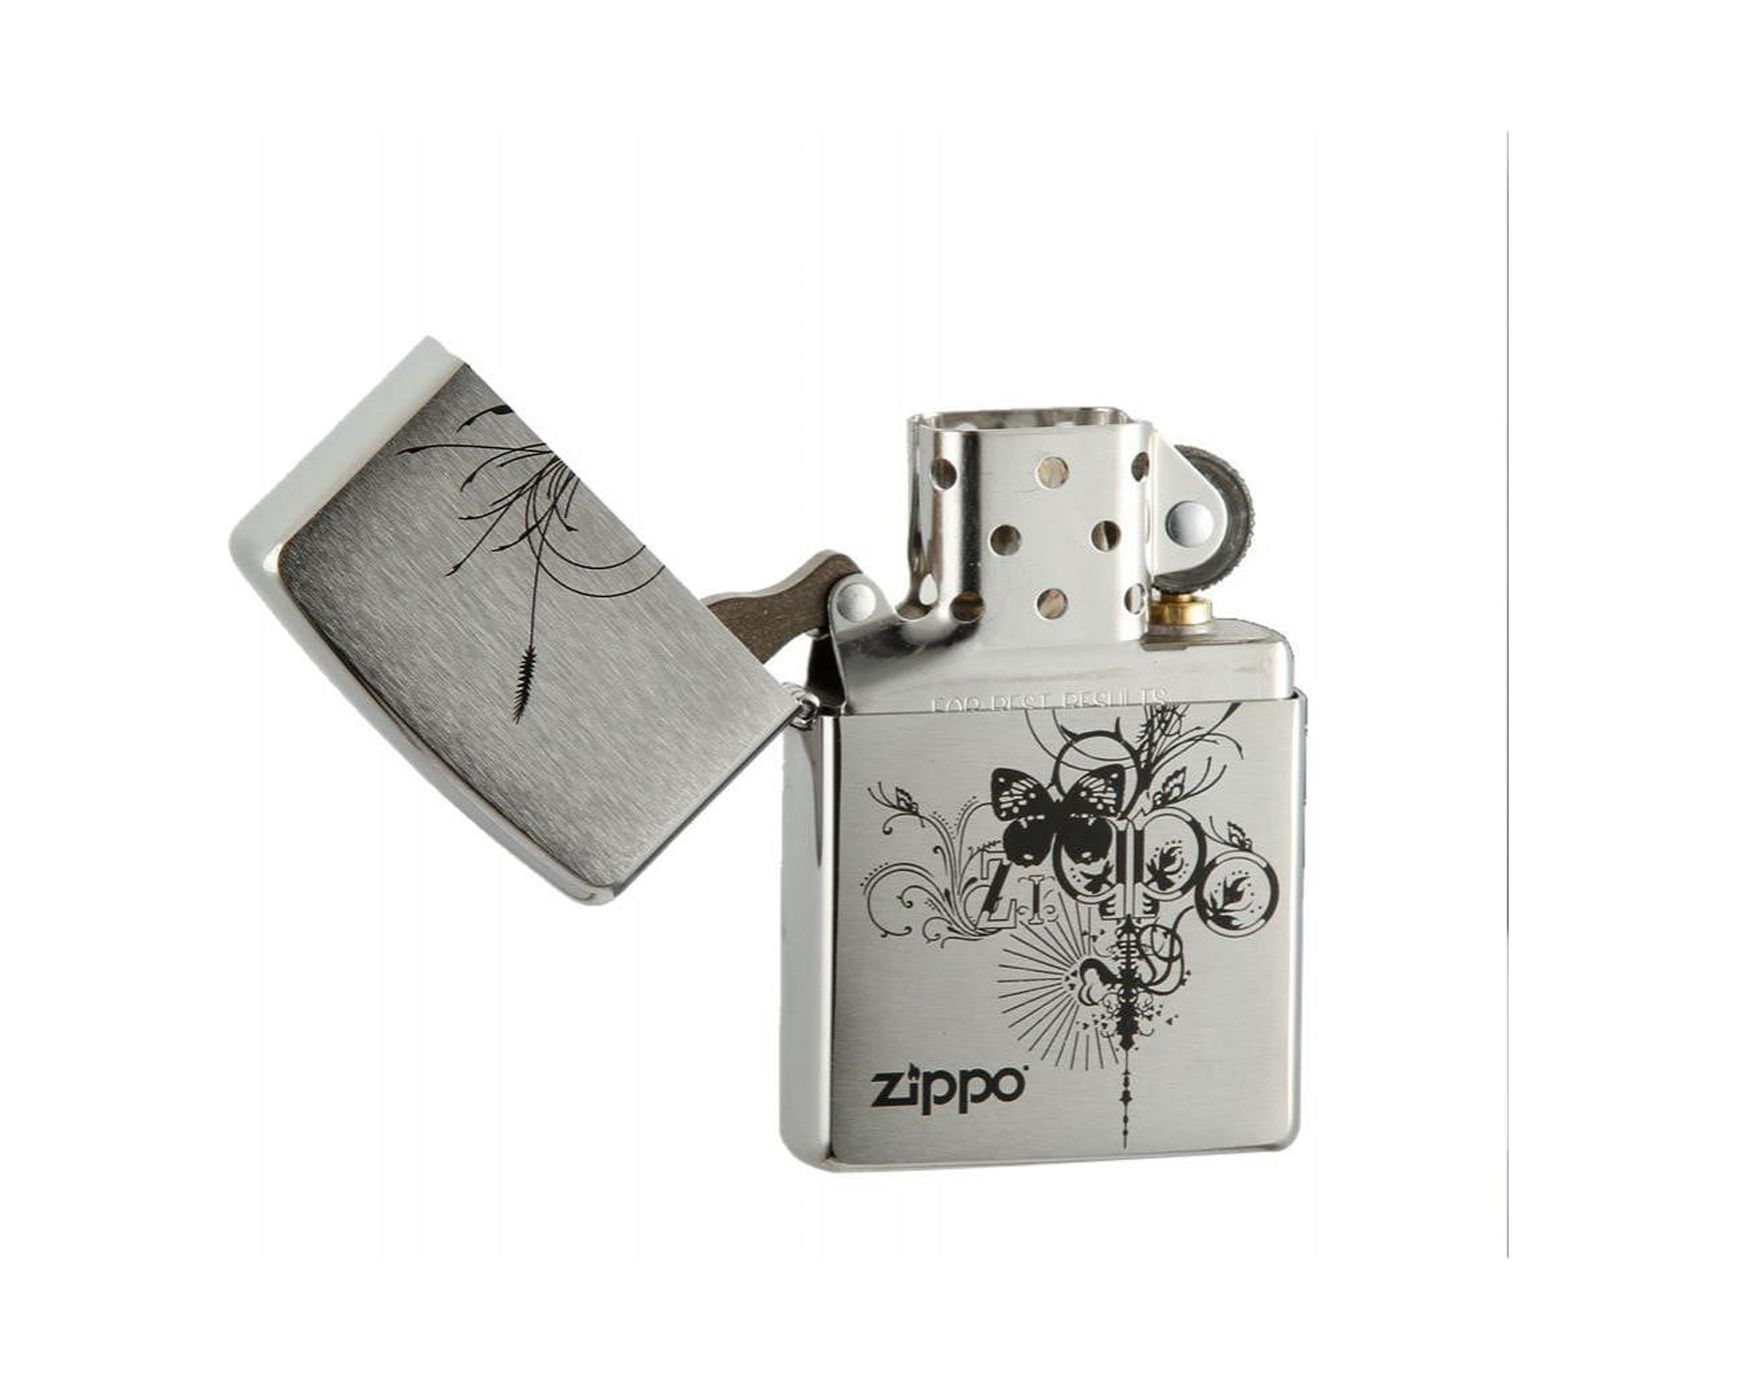 Zippo Lighter - image 2 of 2